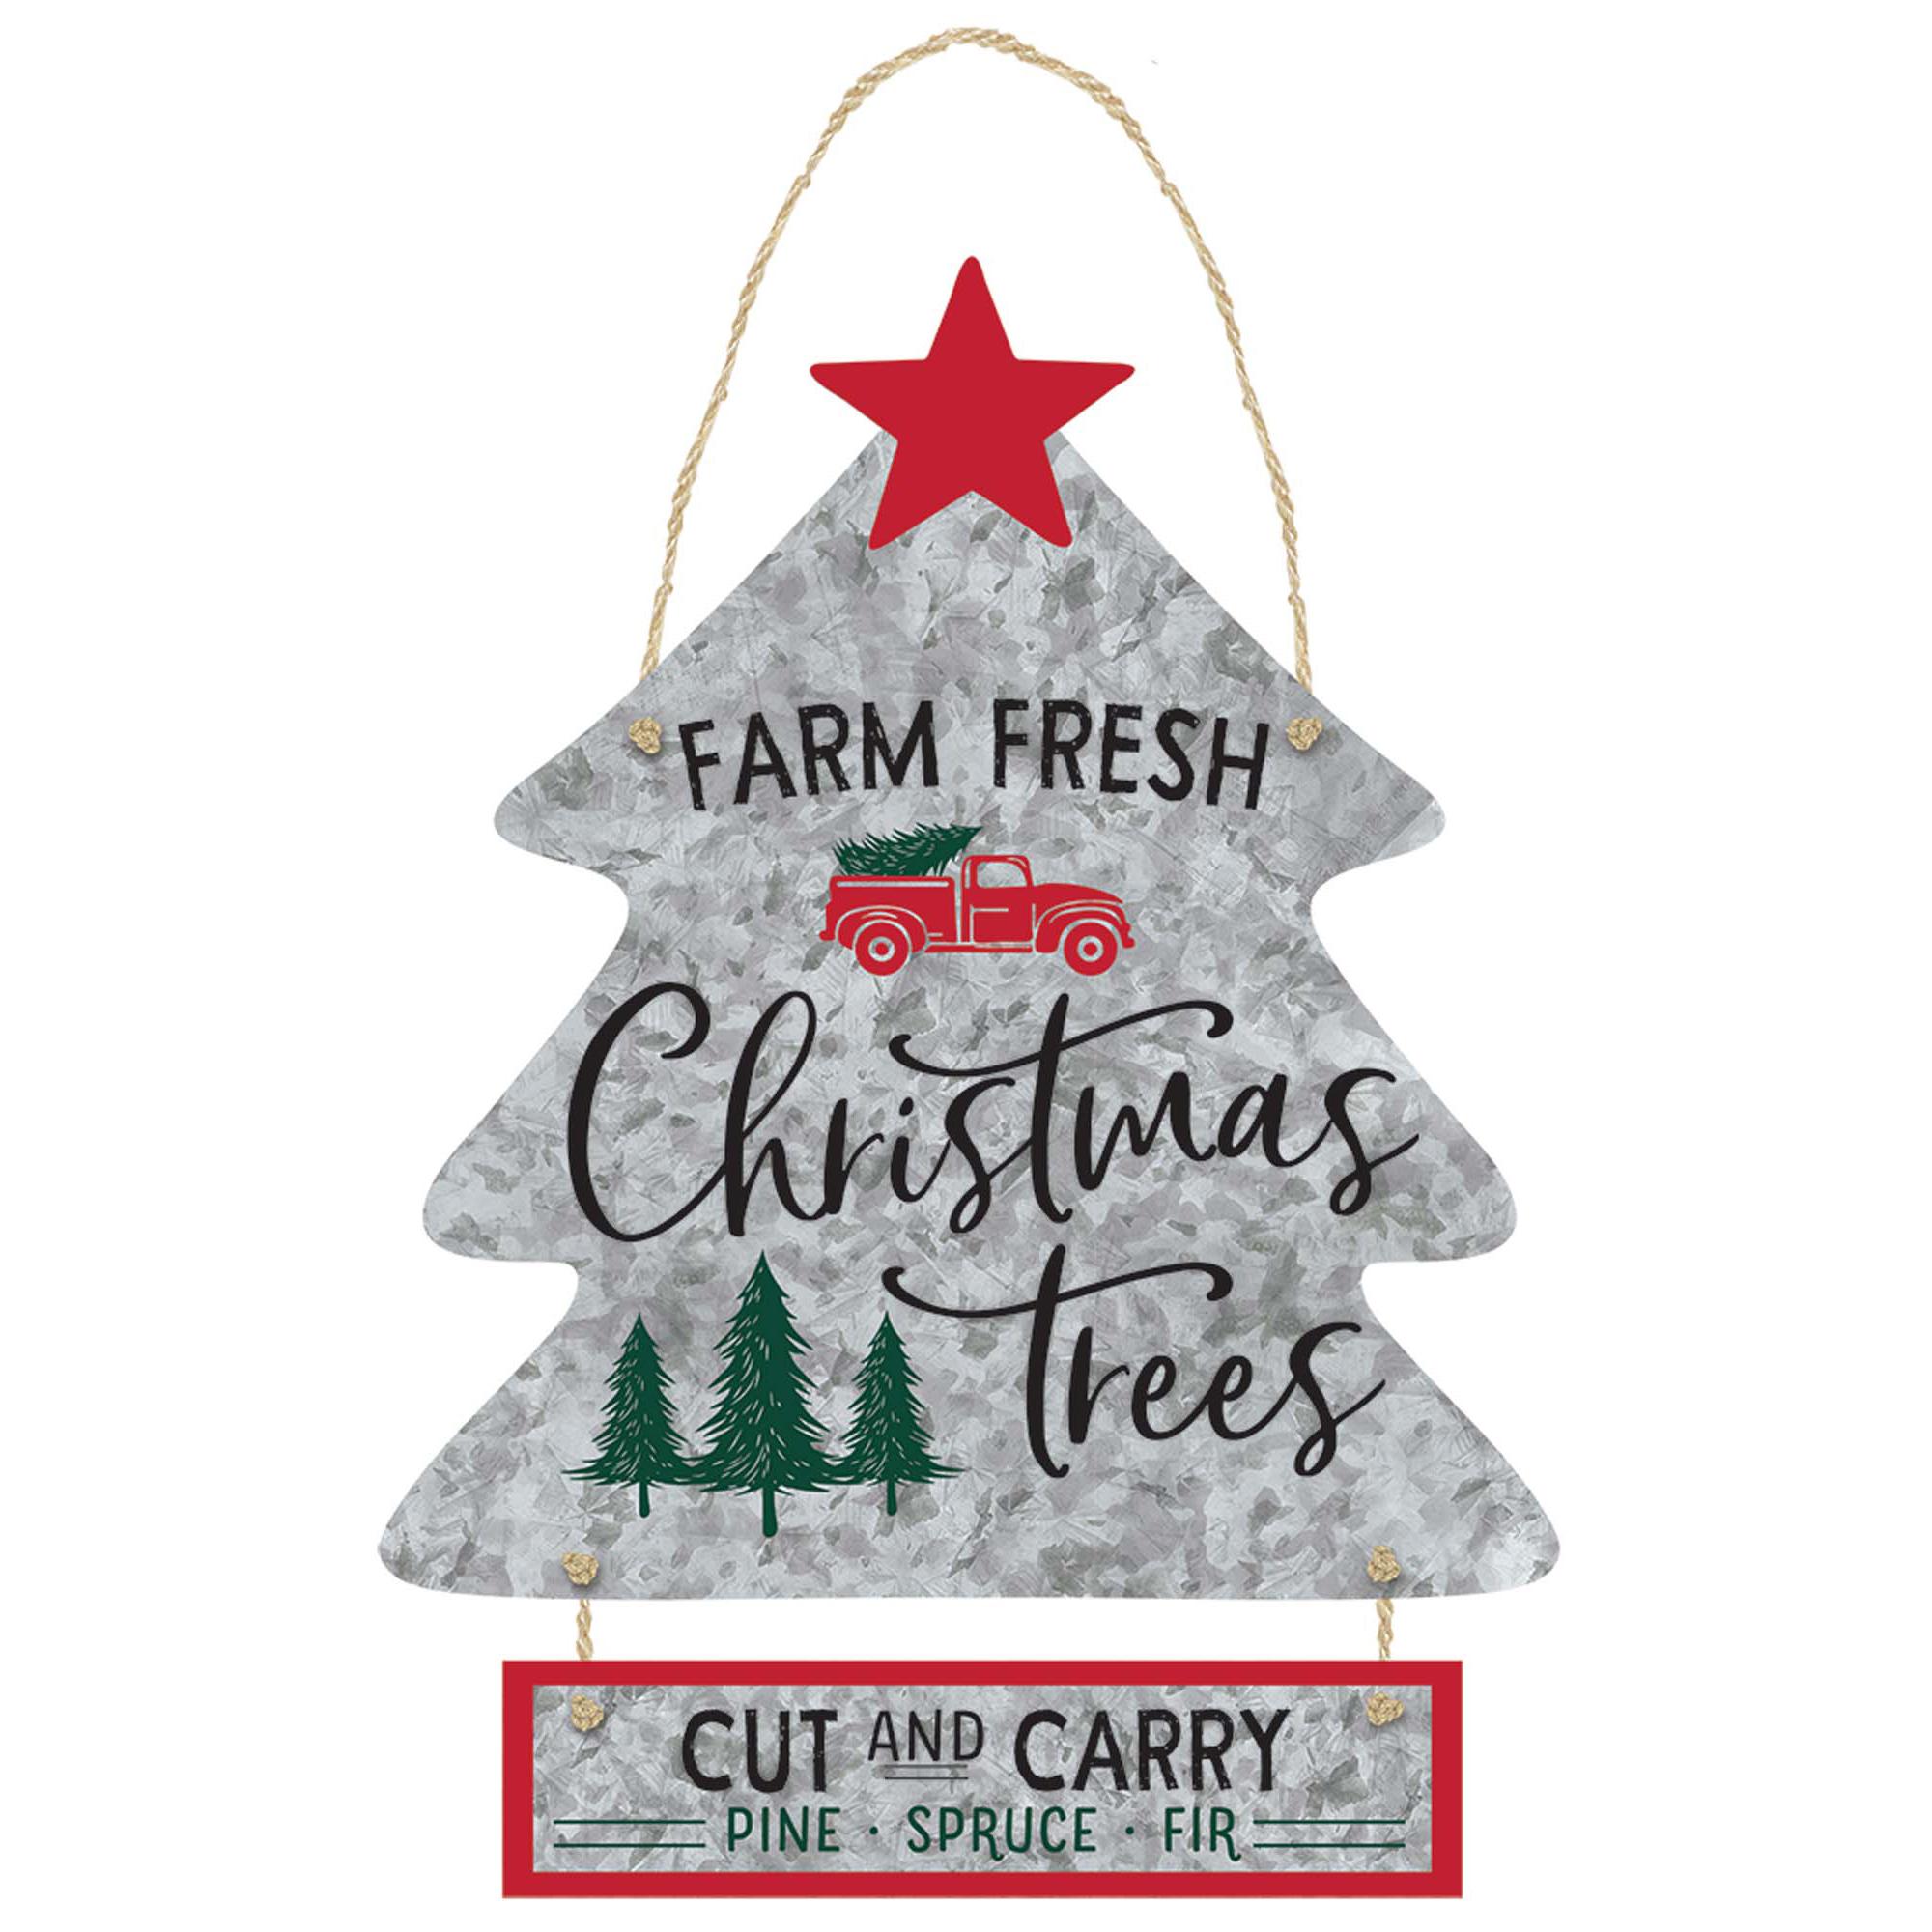 Farm Fresh Christmas Trees Hanging Decoration Decorations - Party Centre